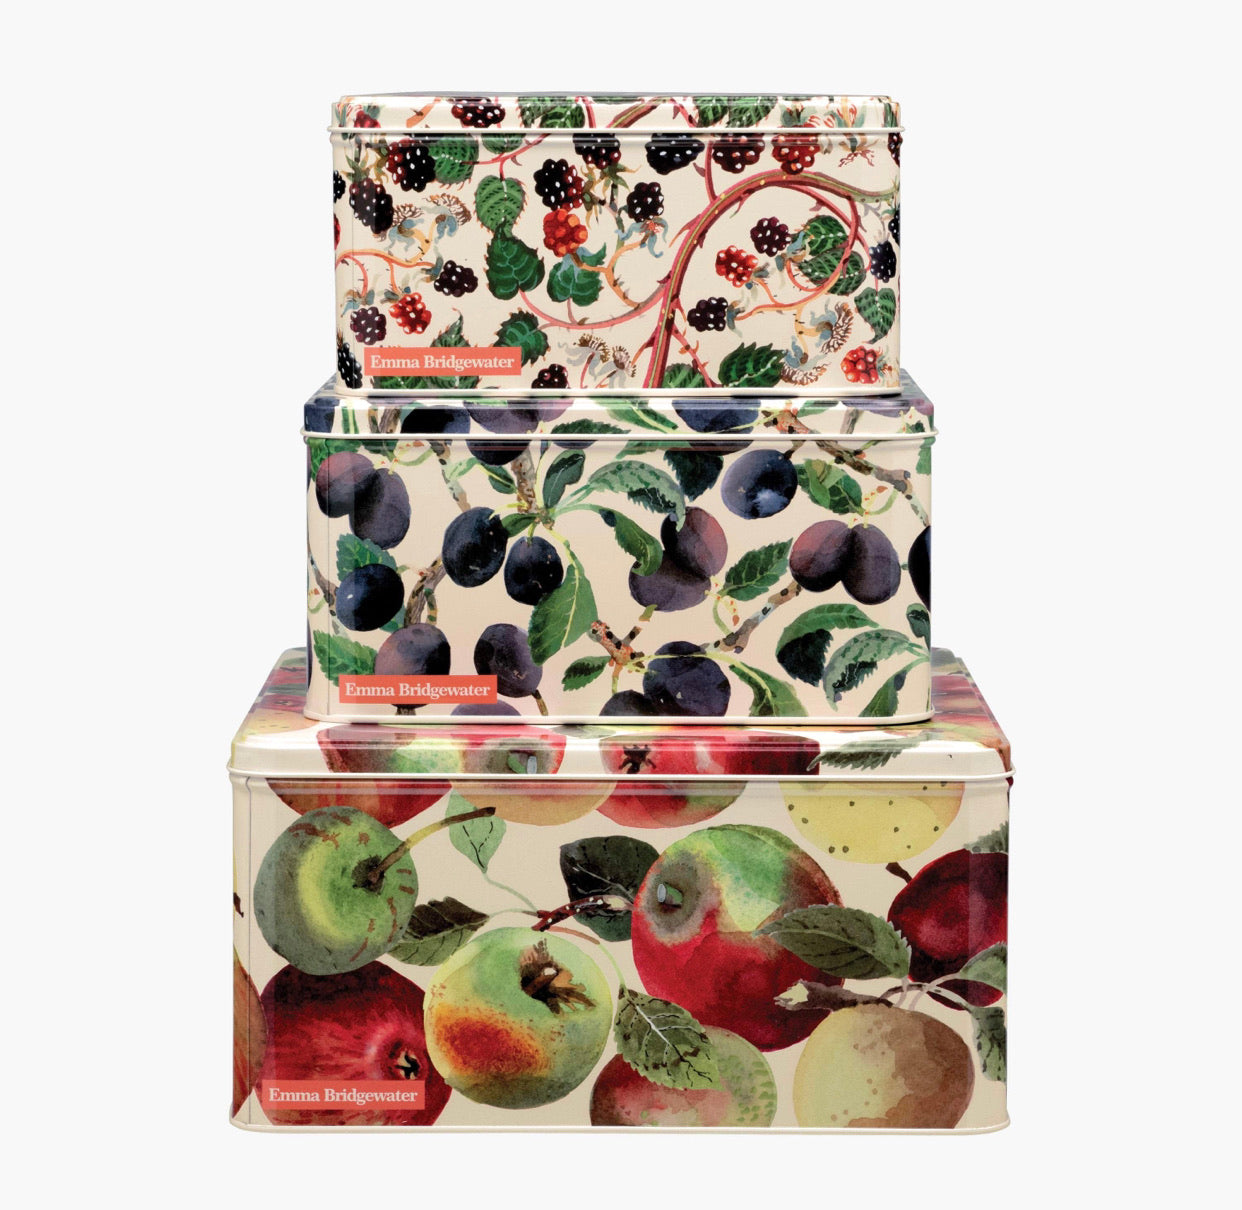 Vegetable Garden Apples Set of 3 Square Cake Tins